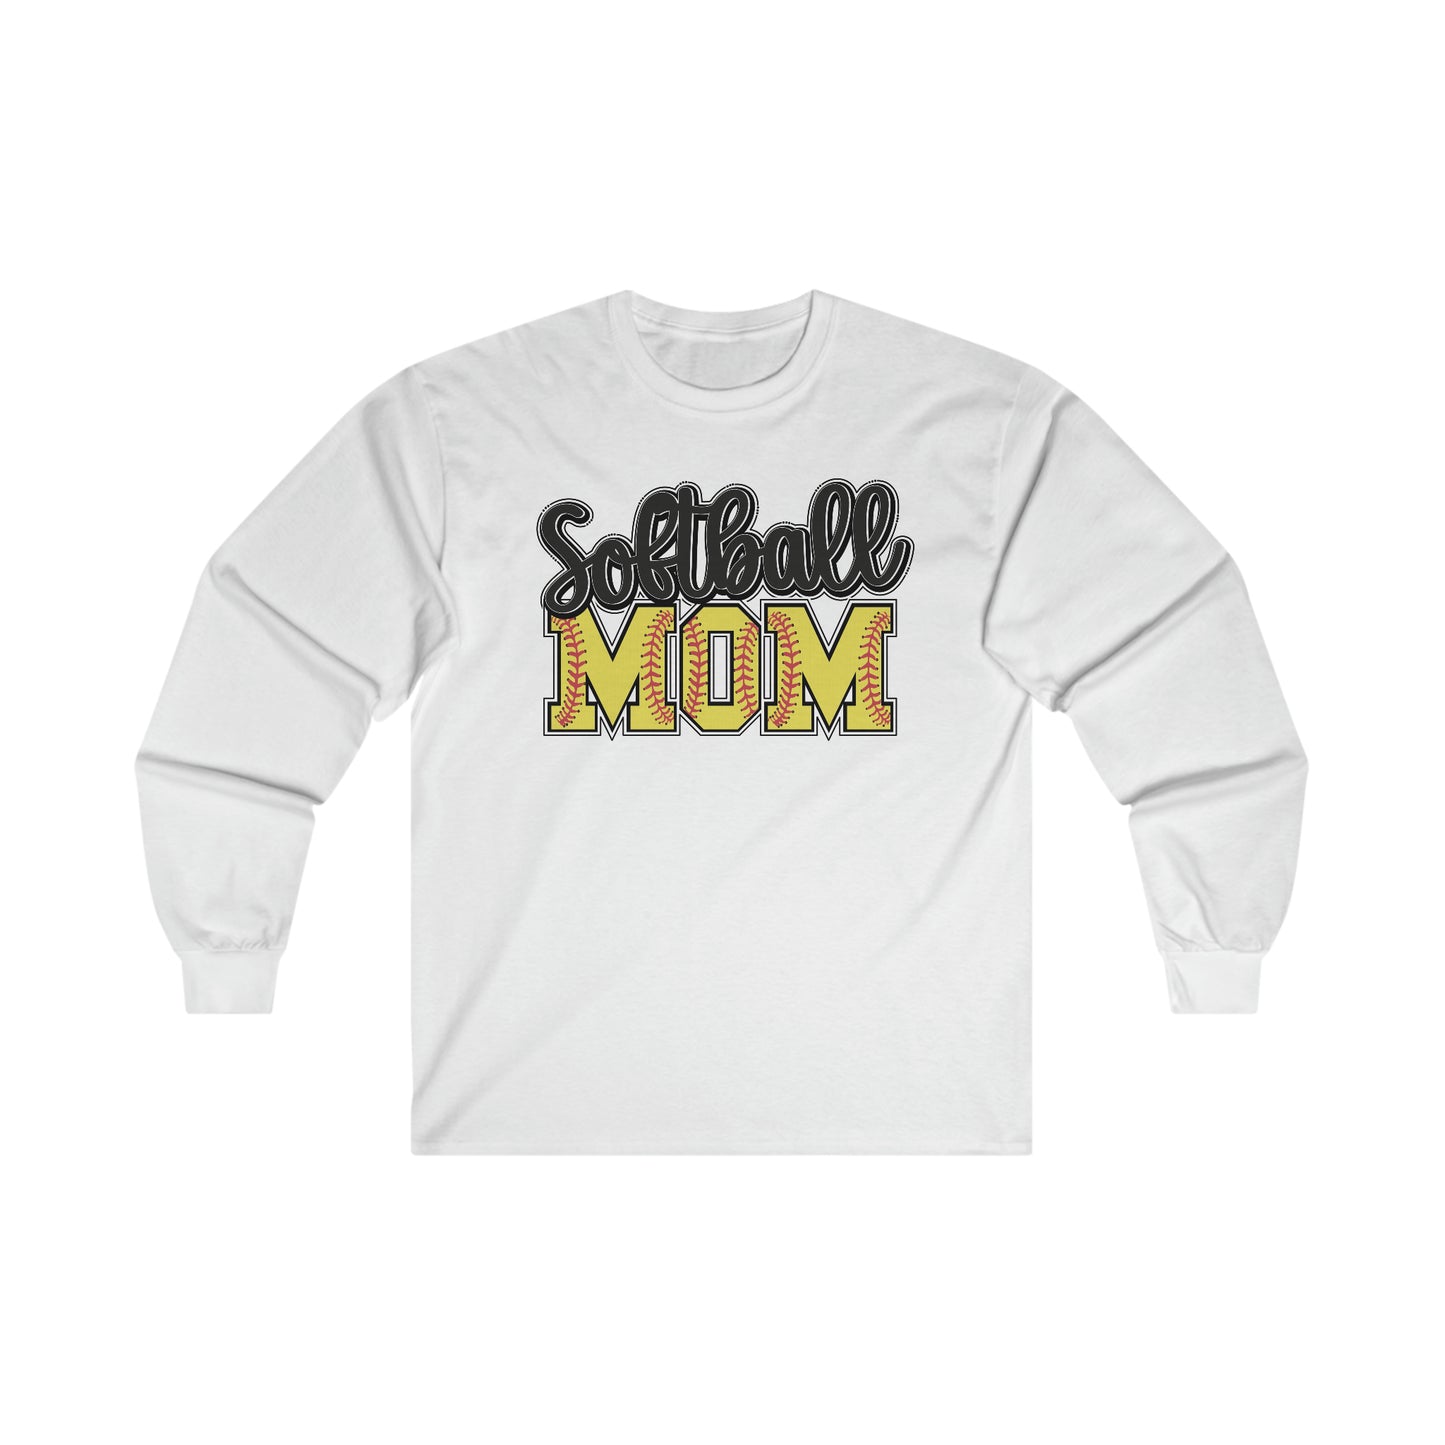 Unisex Ultra Cotton Long Sleeve Tee - Softball Mom